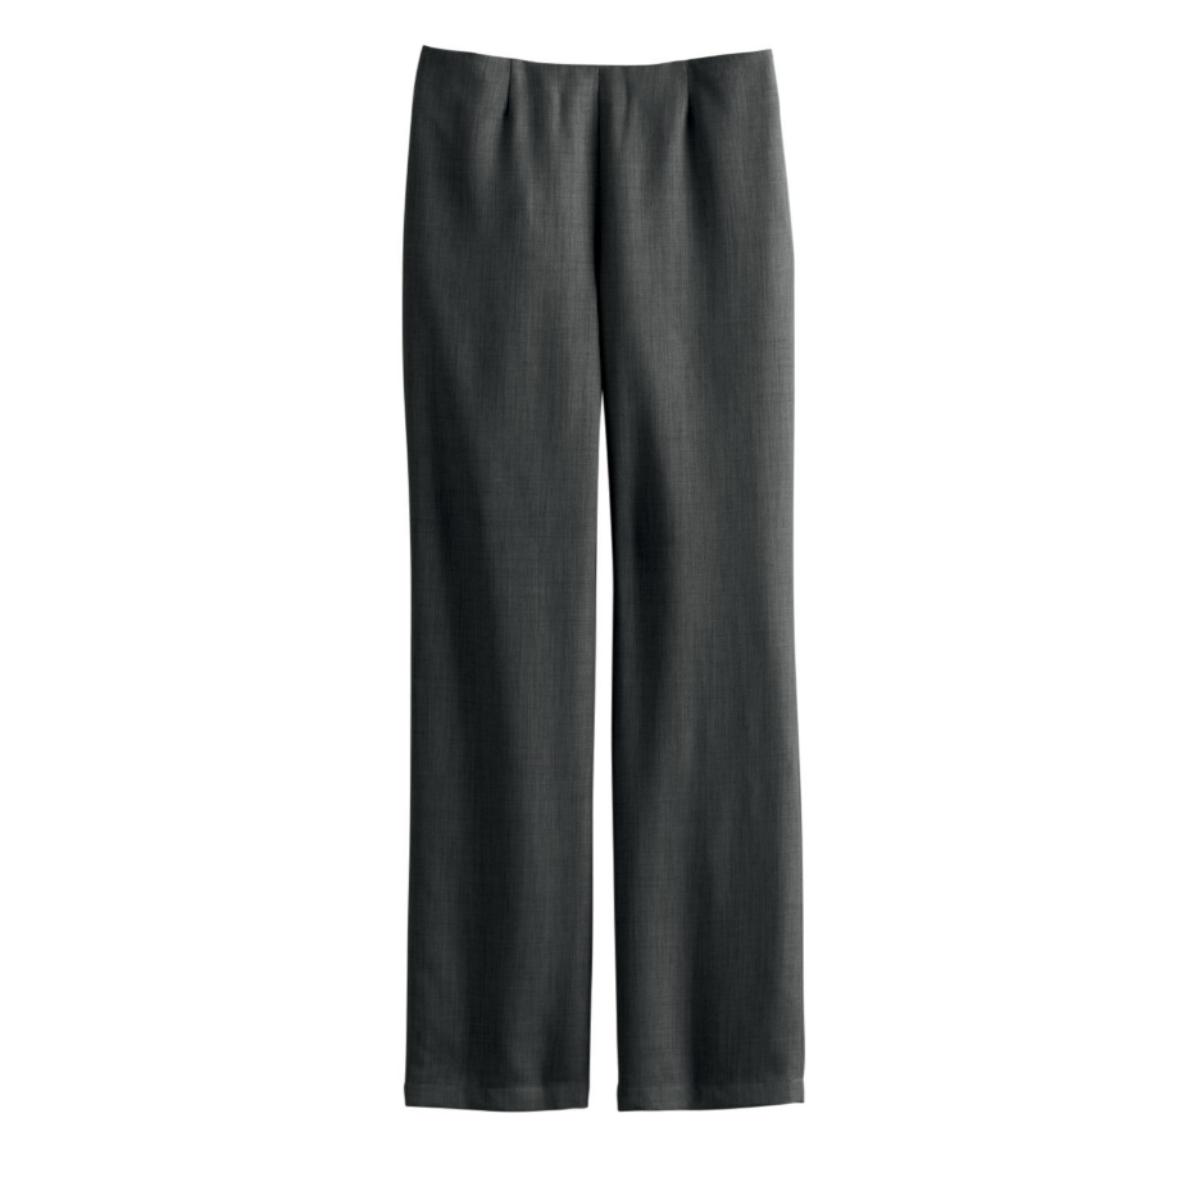 Dark Grey Female Housekeeping Pants w/ 2 Side Pockets